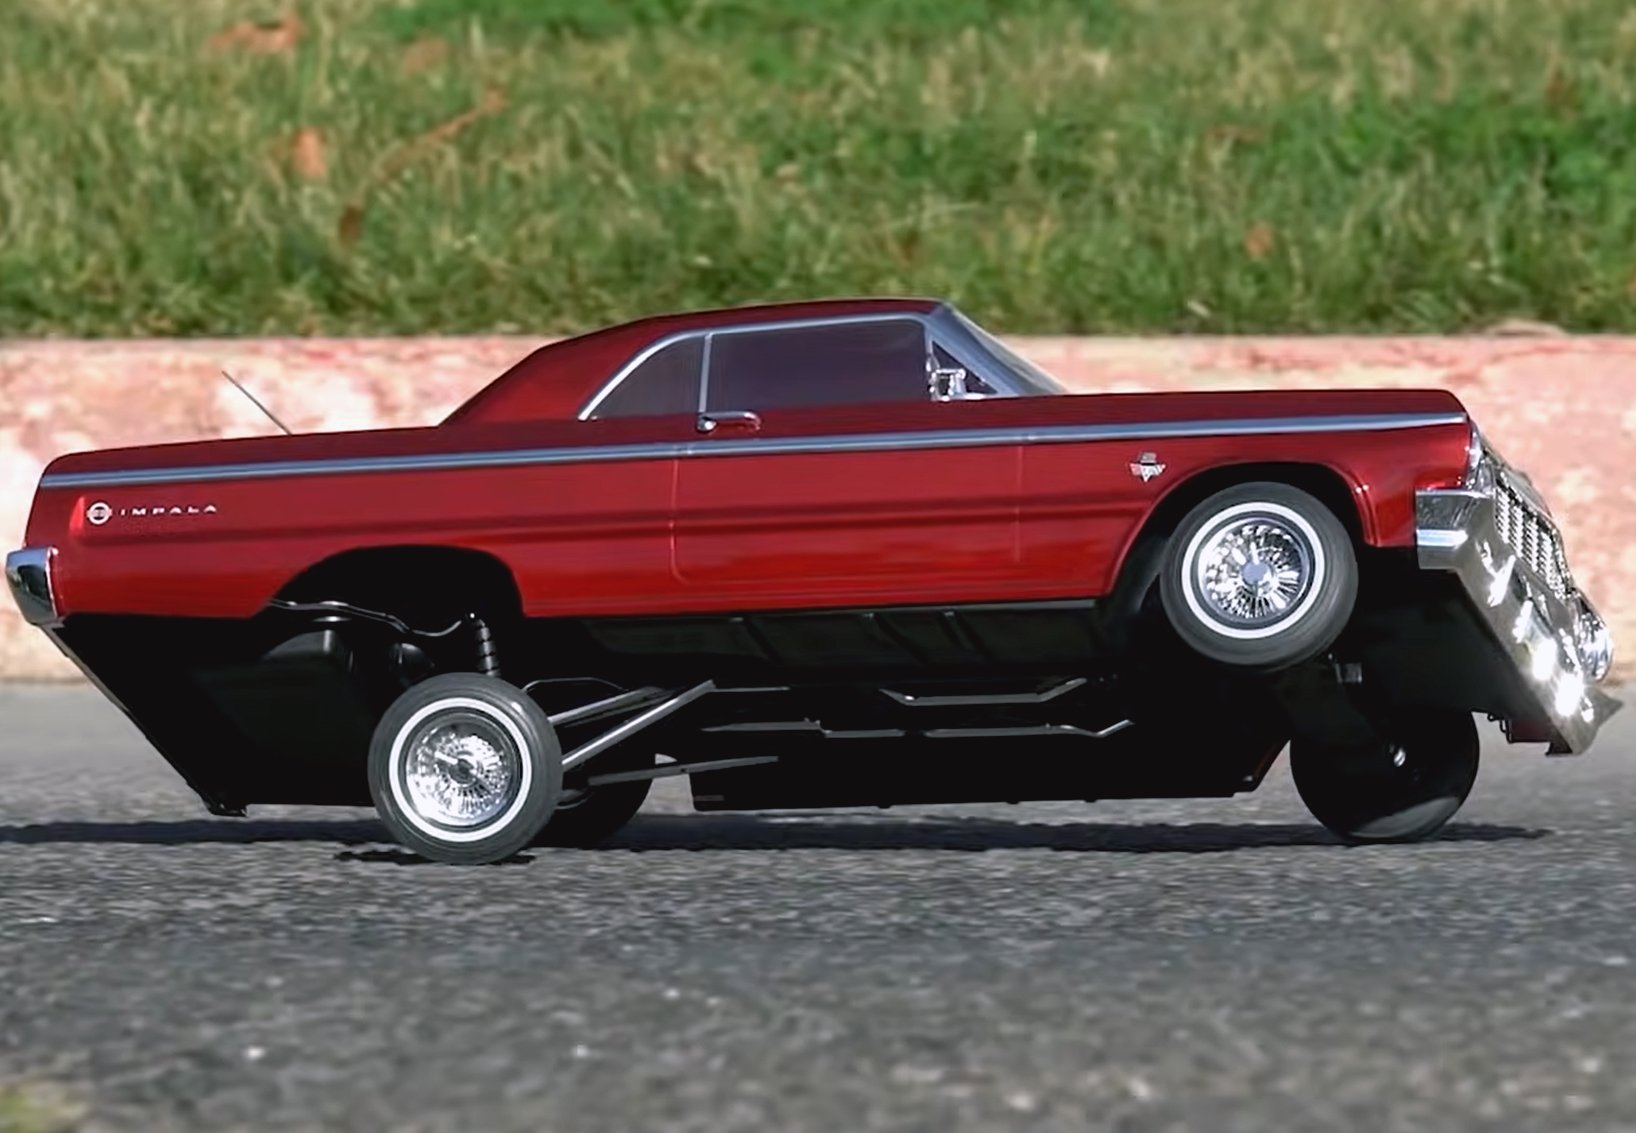 Redcat SixtyFour 1964 Impala Features